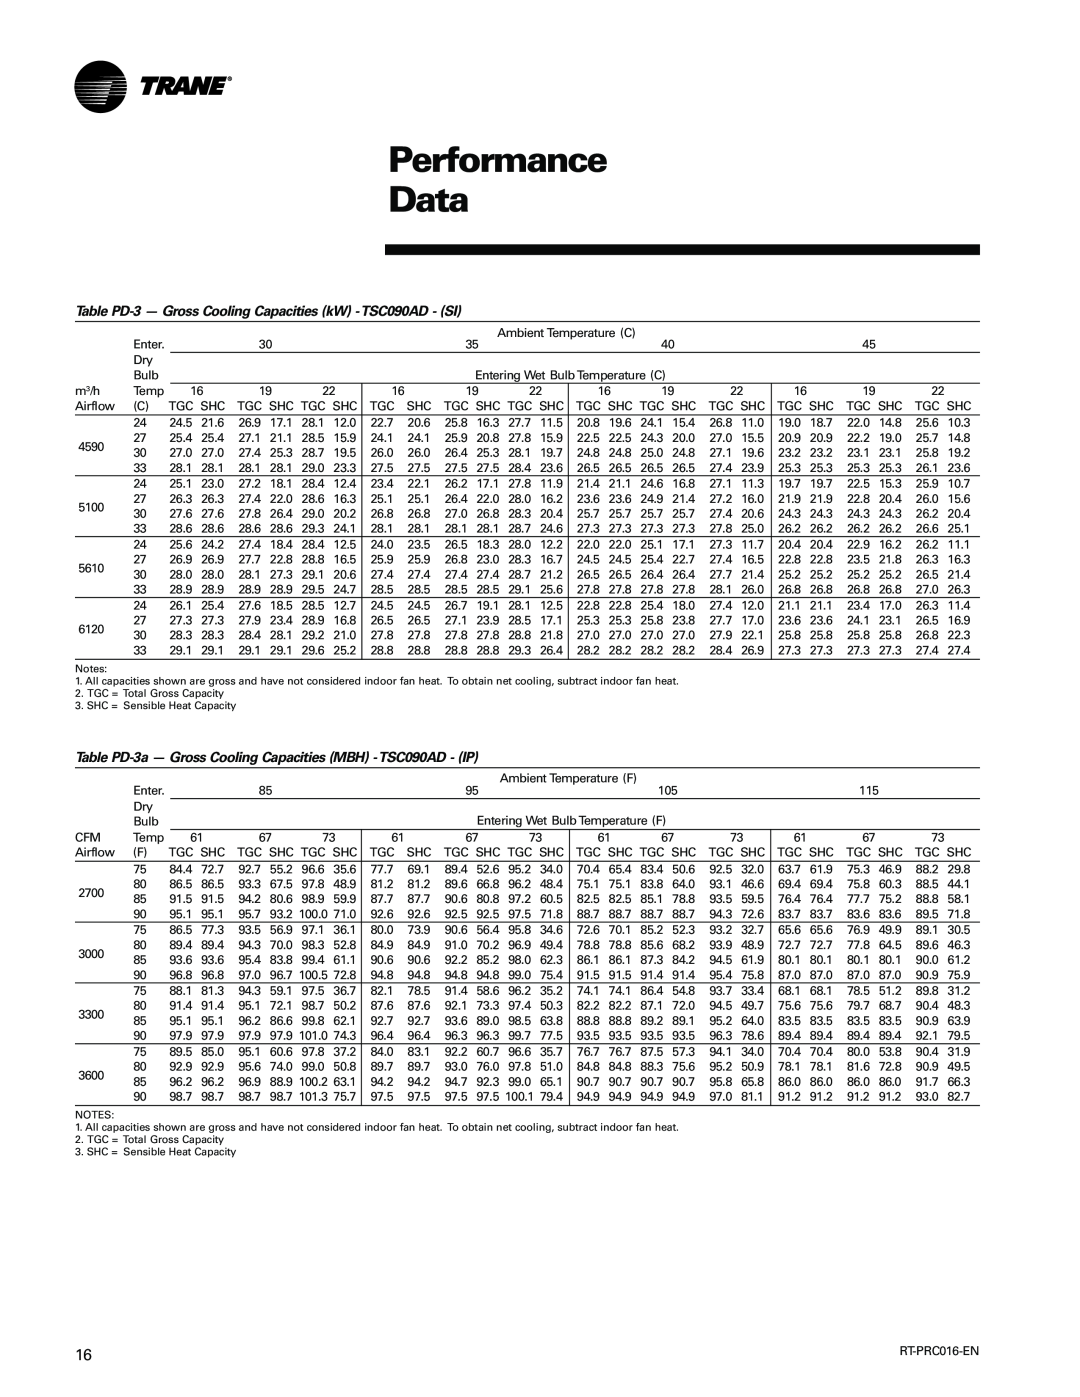 Trane TSC060-120 manual Performance Data, Enter 